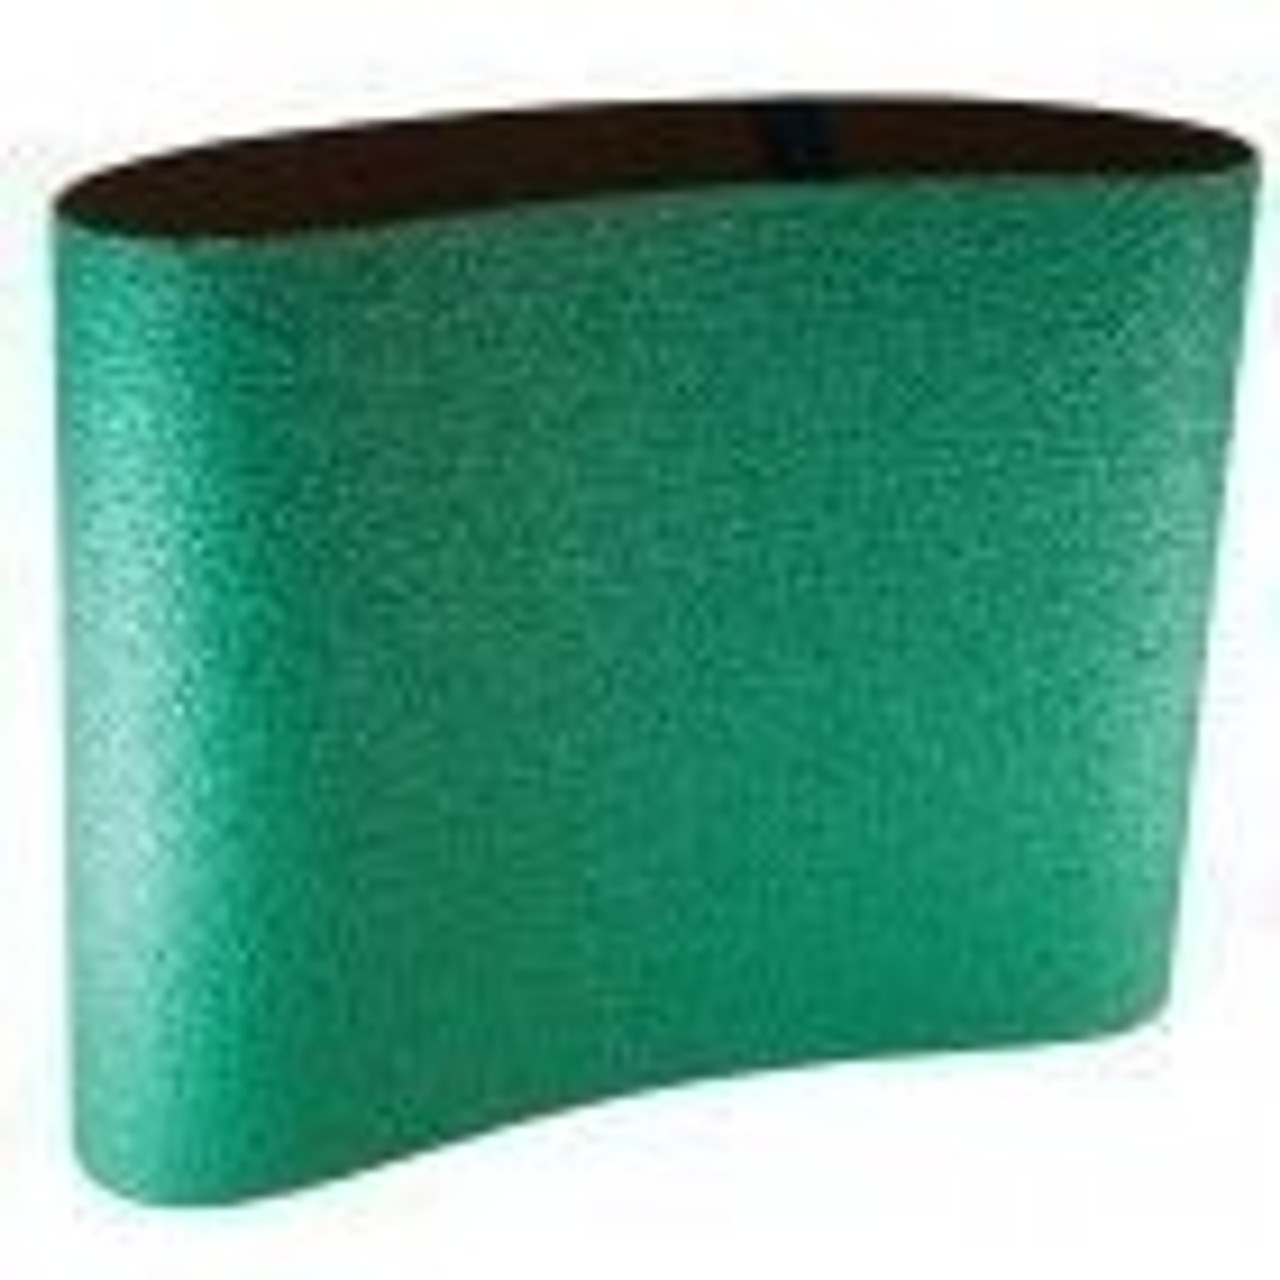 Bona Green Ceramic Belts 9-7/8" x 29-1/2"